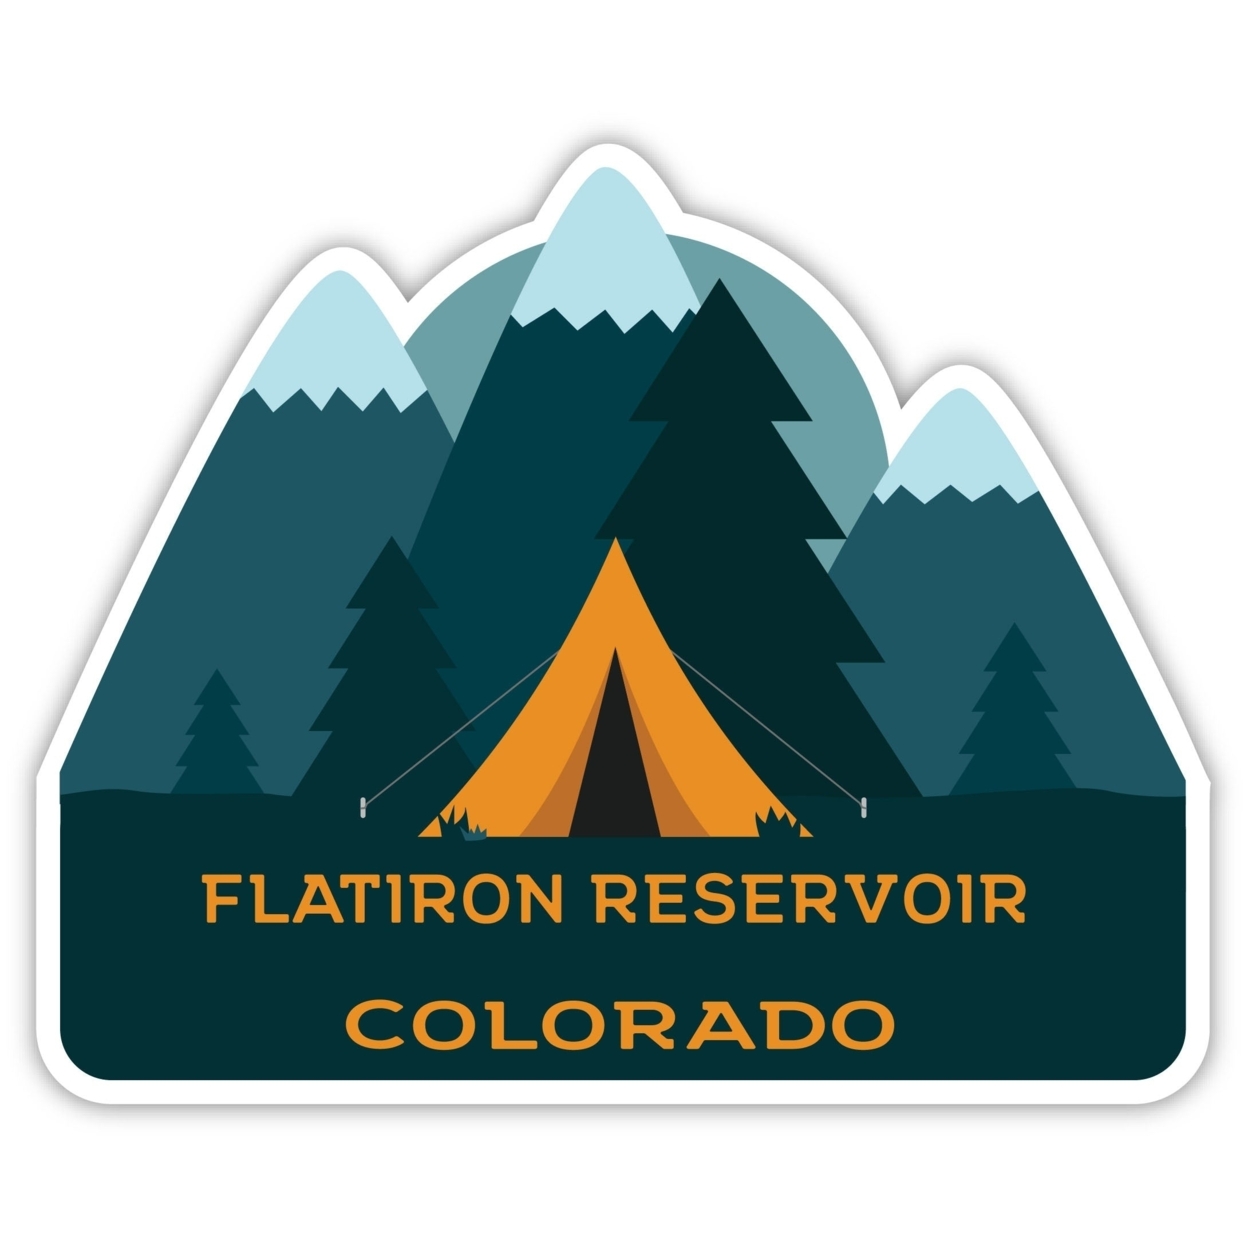 Flatiron Reservoir Colorado Souvenir Decorative Stickers (Choose Theme And Size) - 4-Pack, 12-Inch, Tent